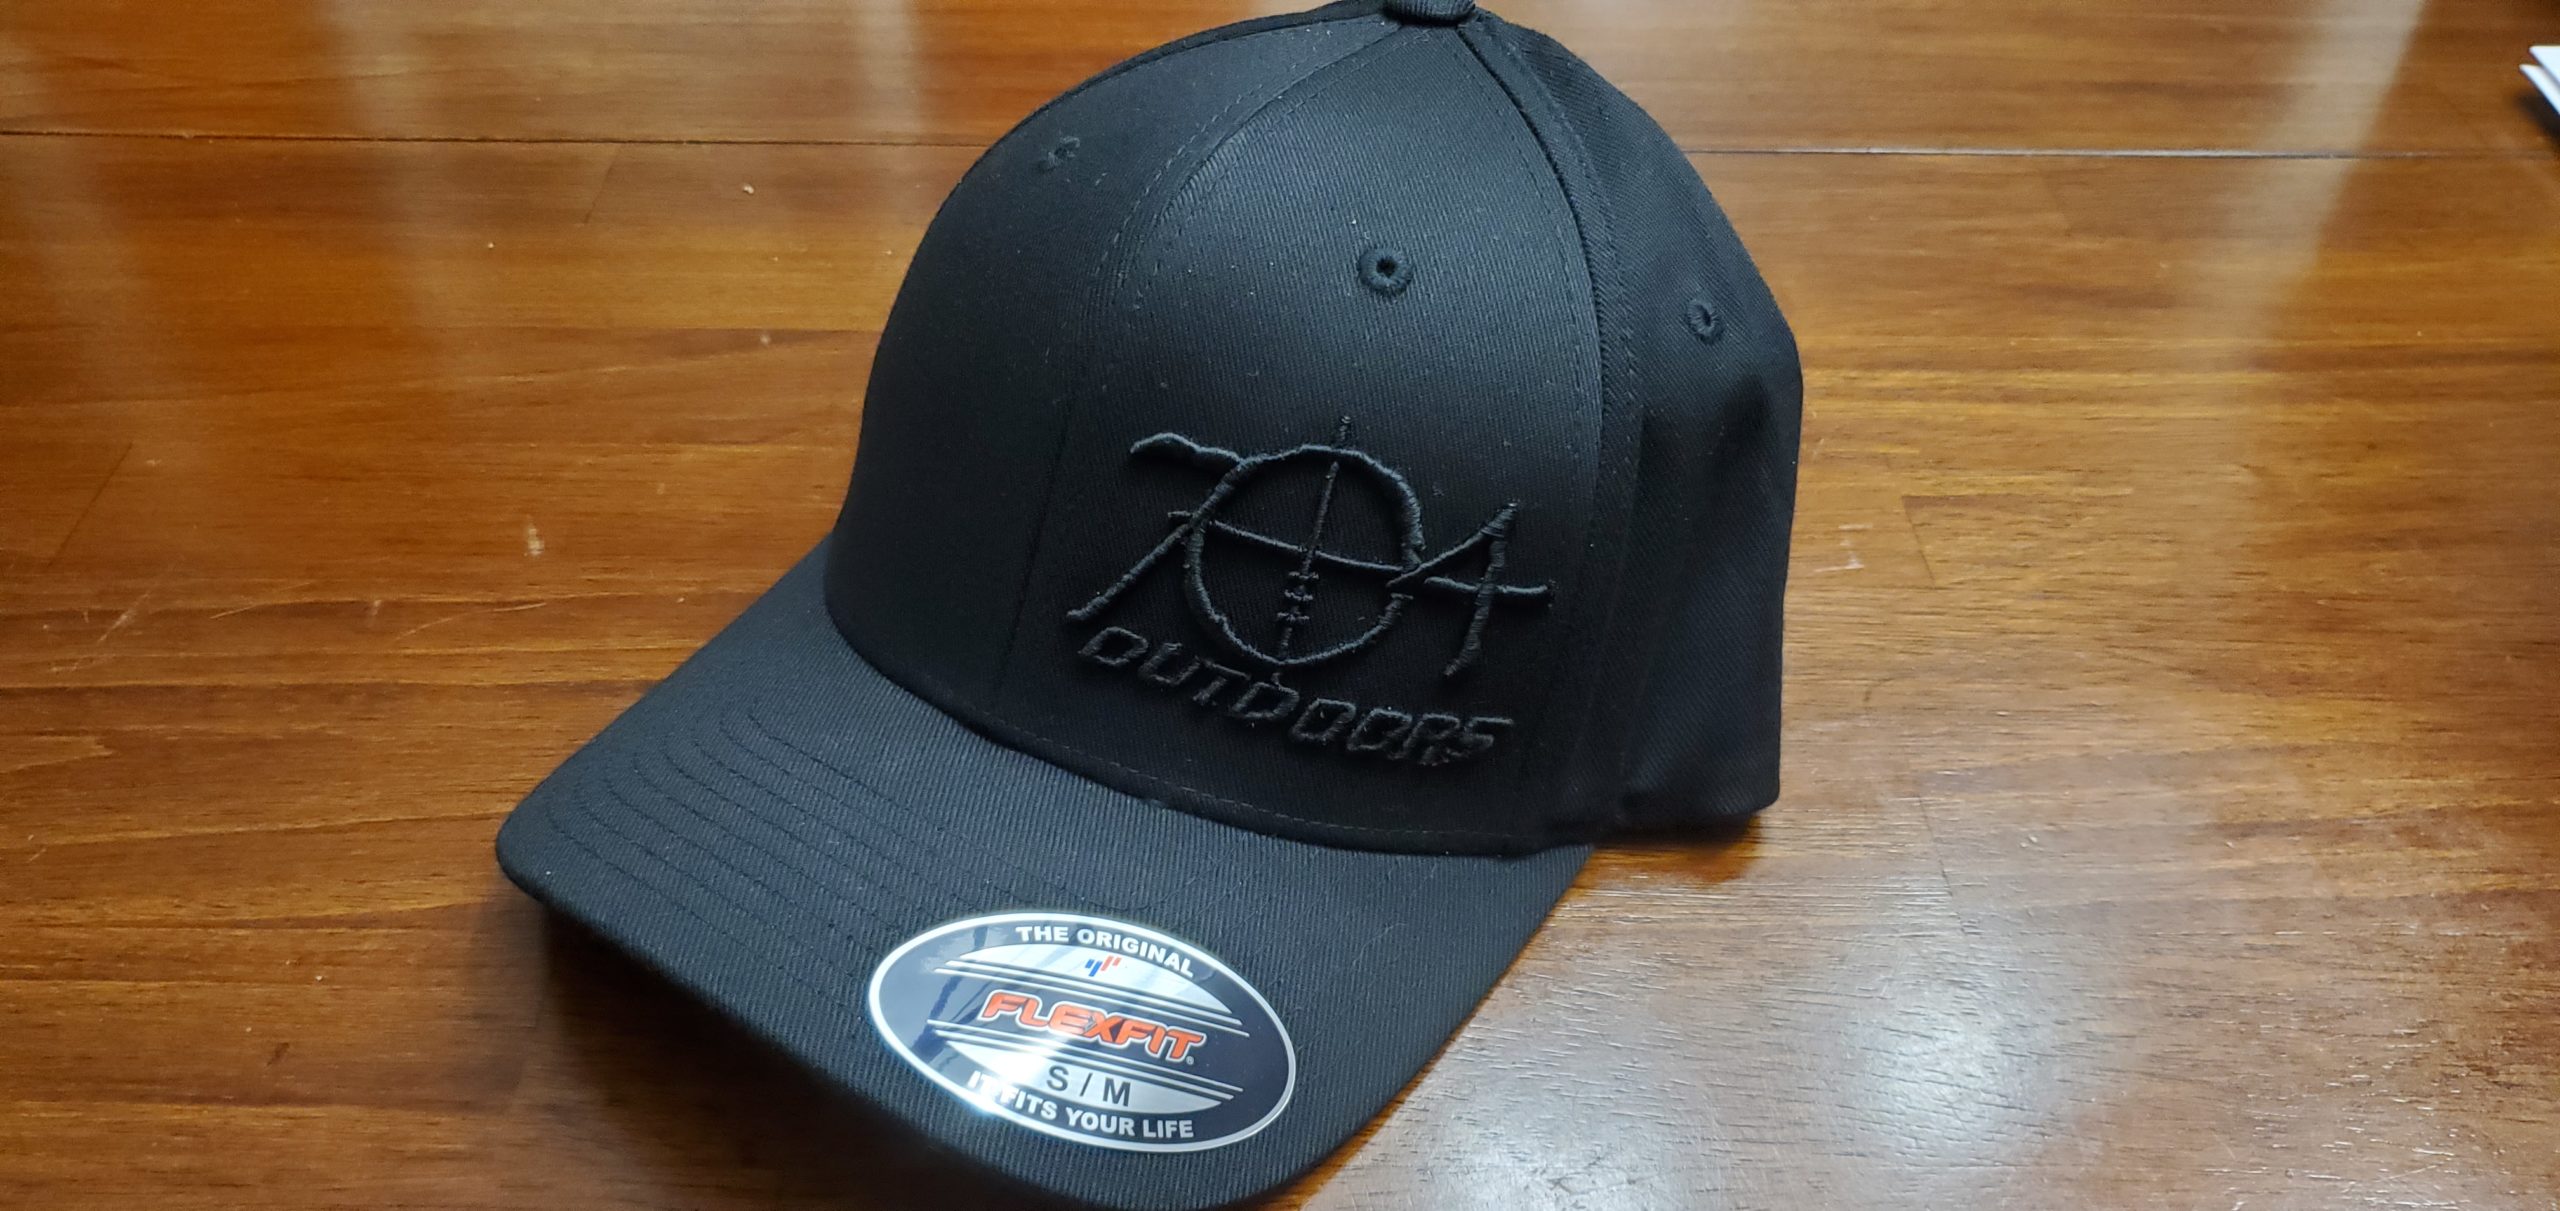 704 Outdoors Hat – Flexfit Raised Black Embroidery on Black Hat